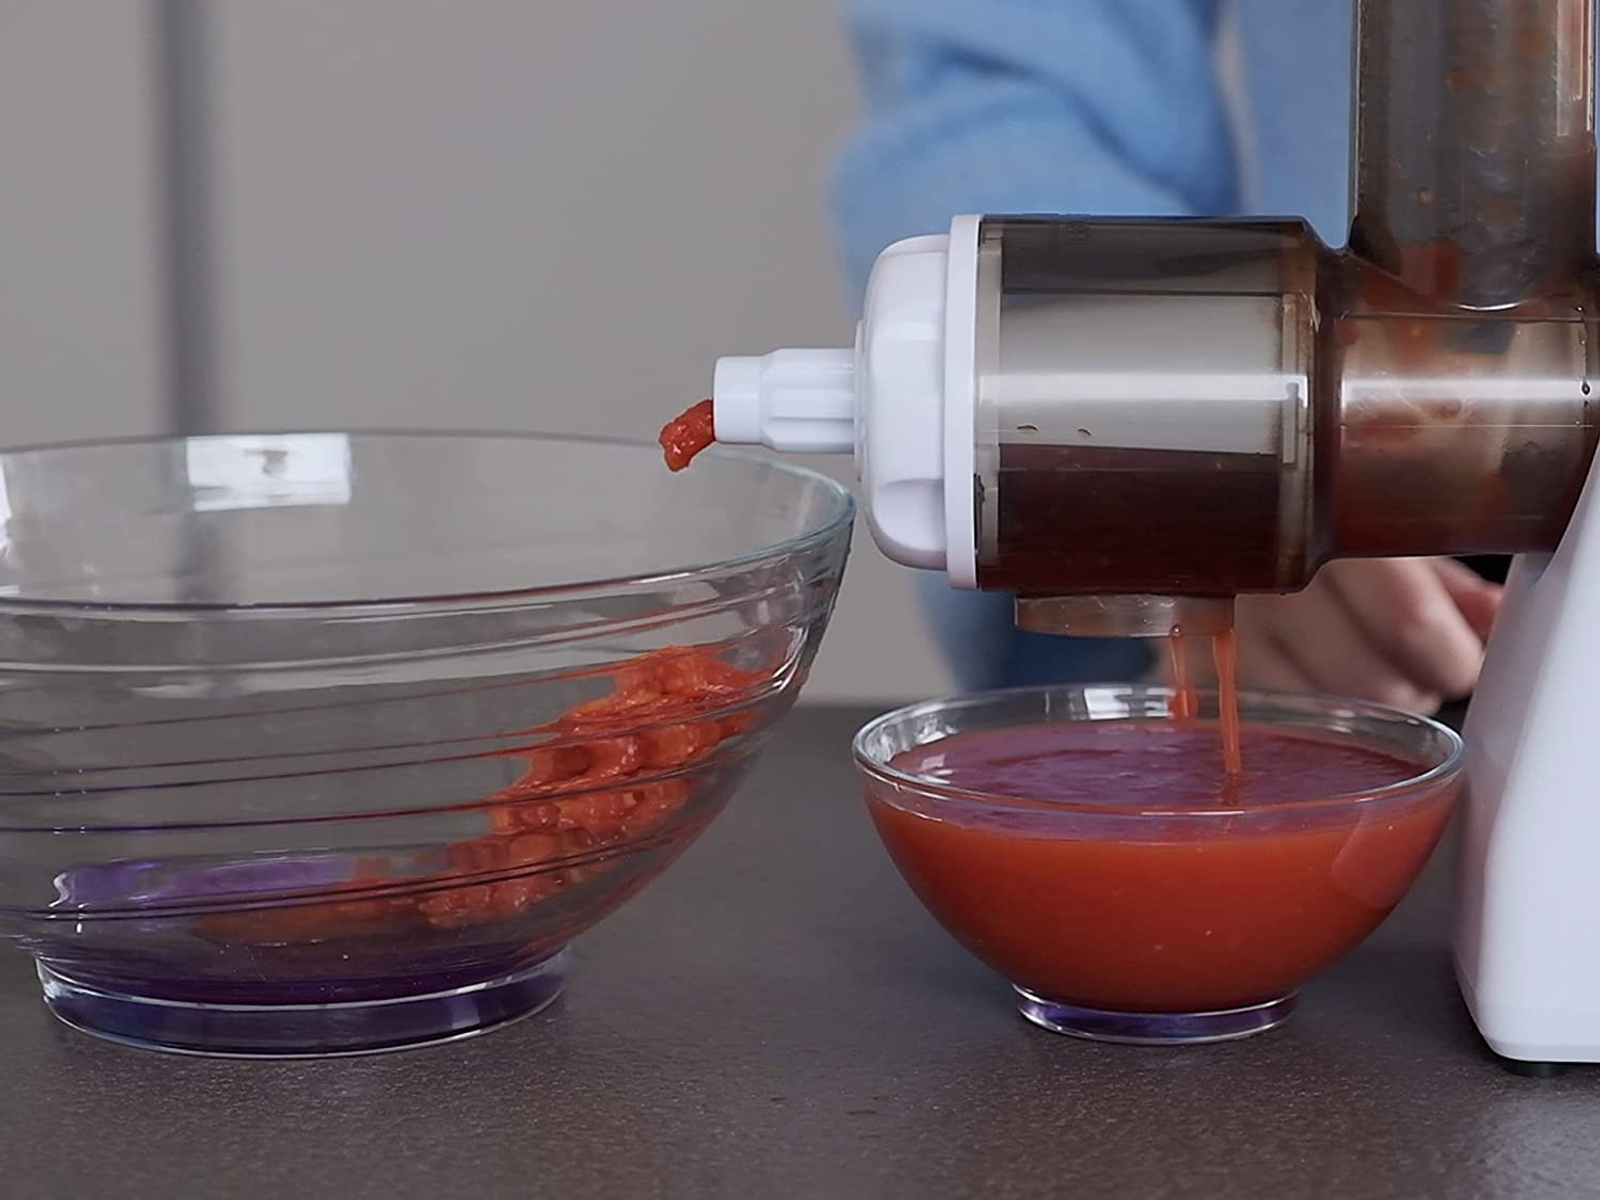 Tomatenpresse weiß 300 Watt, Entsafter BEPER